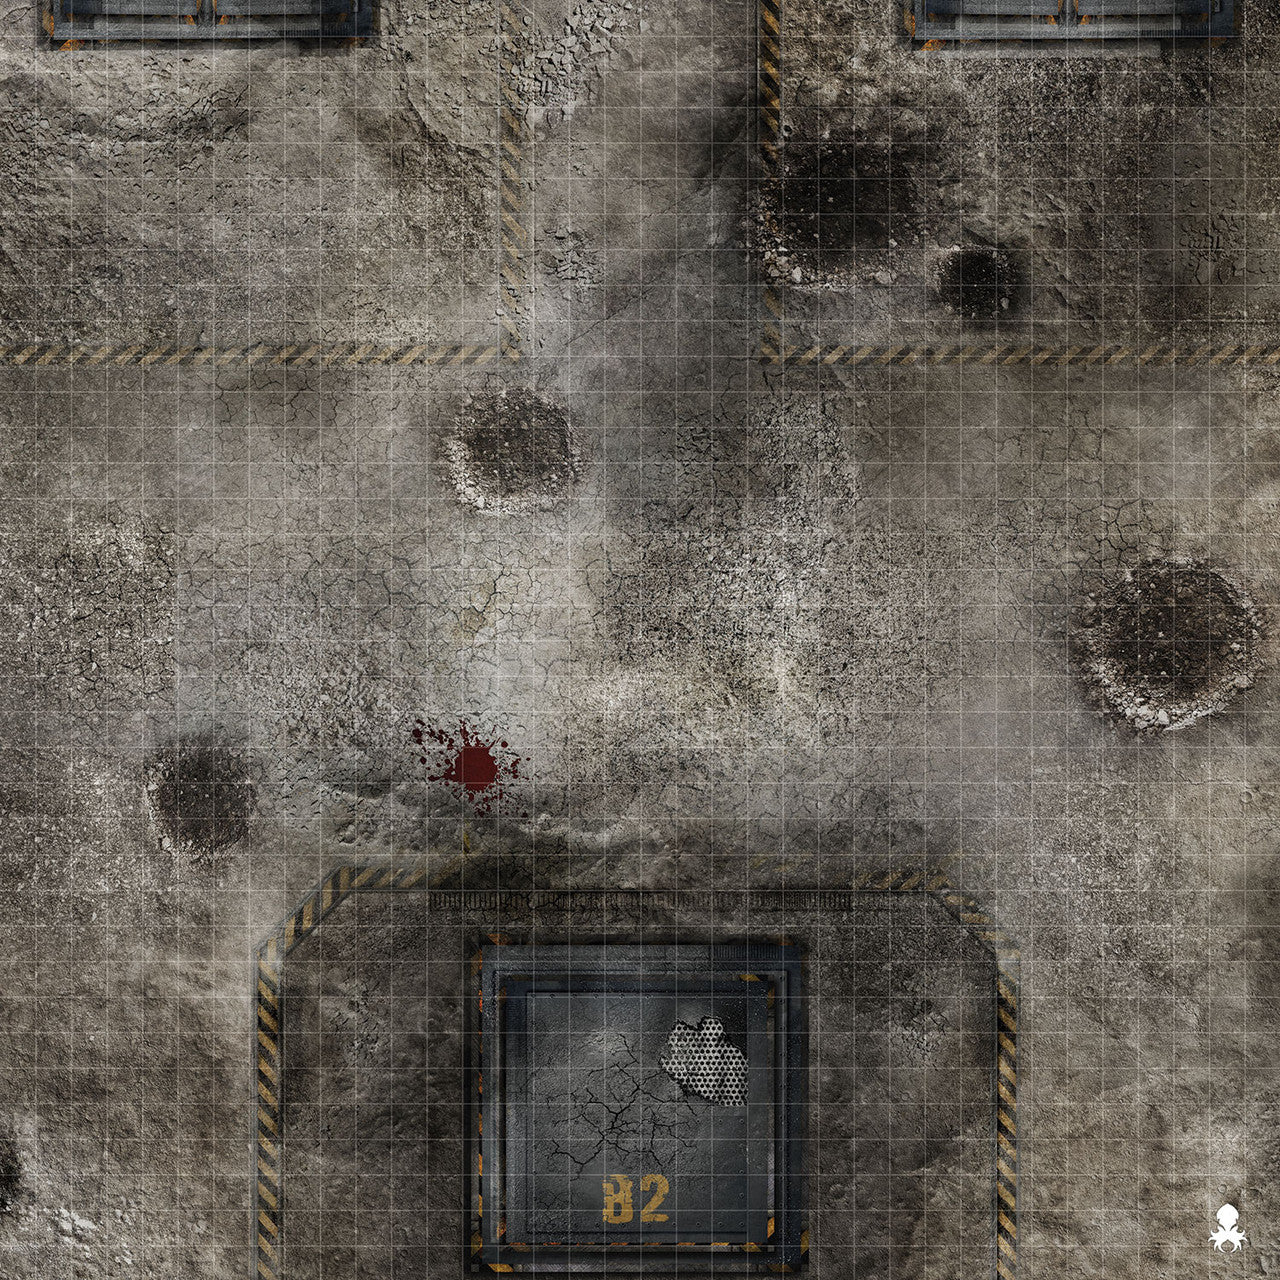 Kraken Dice RPG Encounter Map Quick Mat- Battle Zone 36"x36"